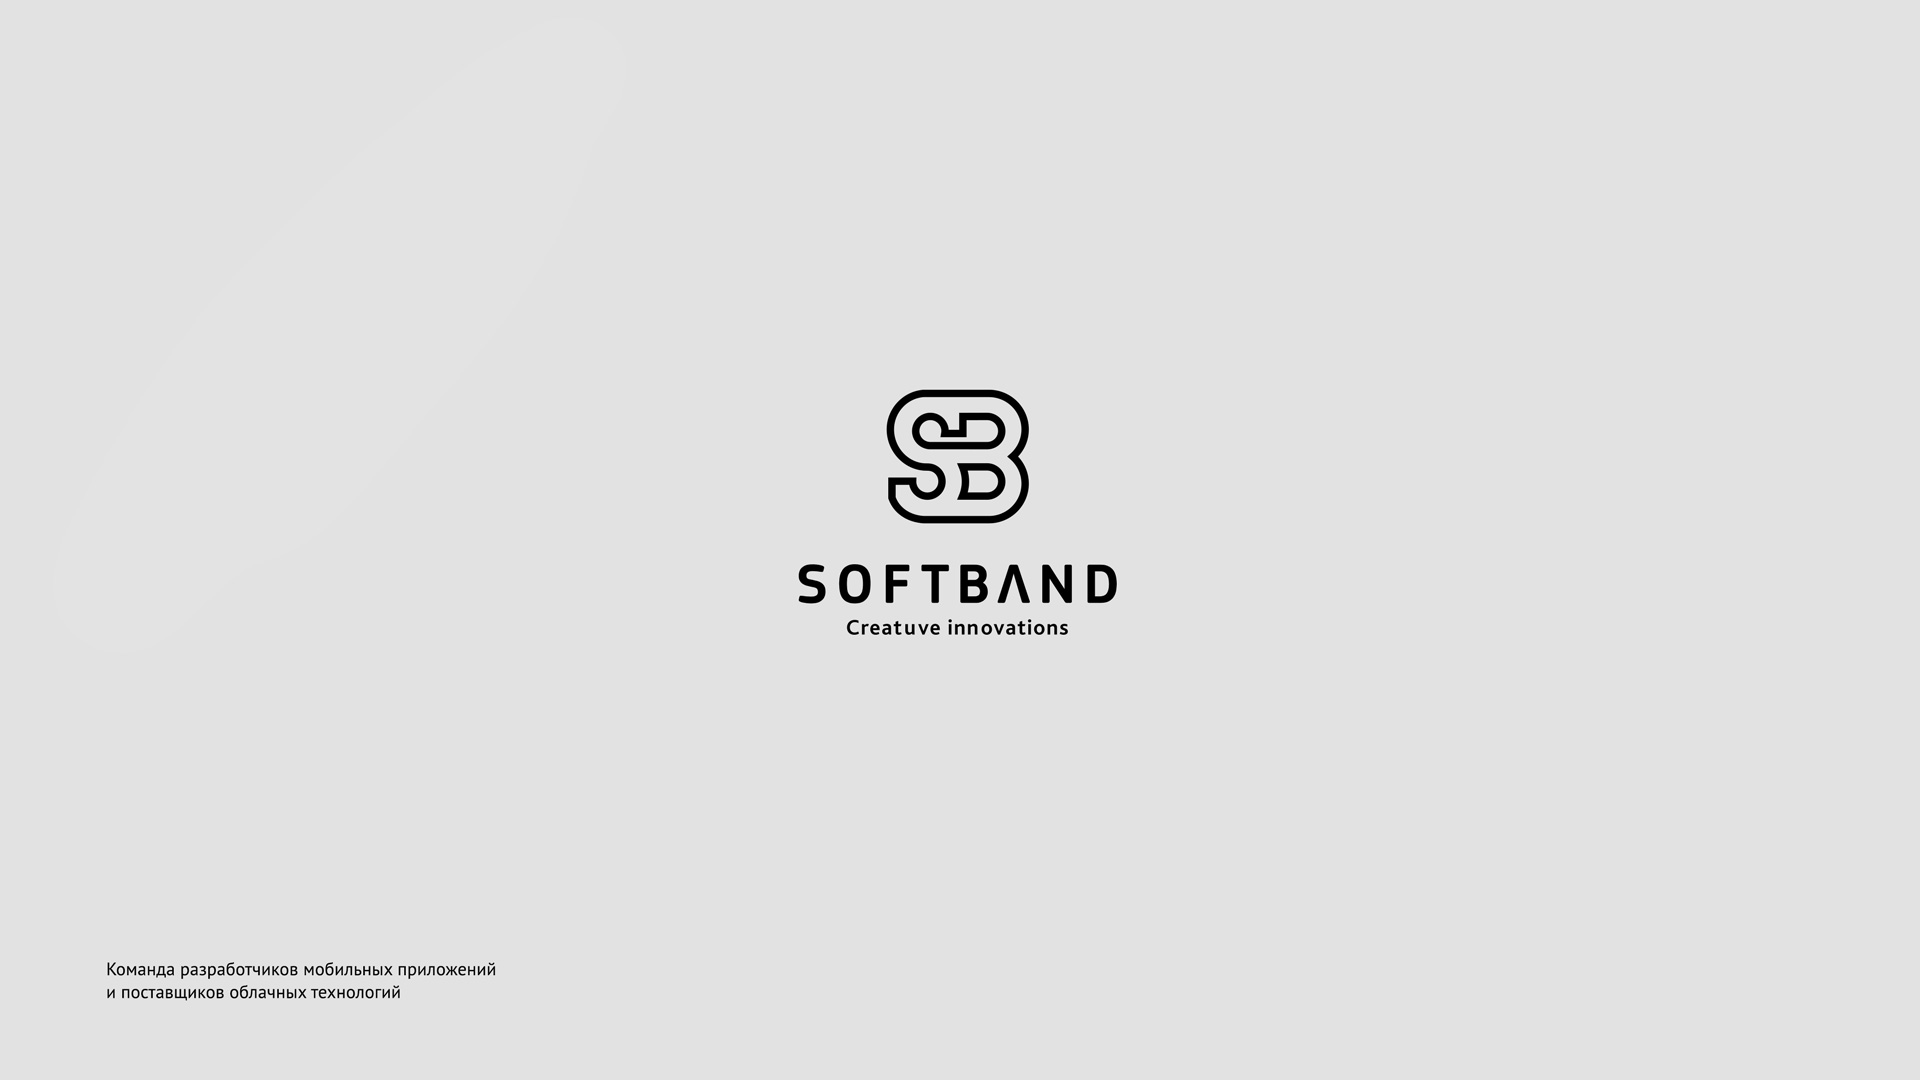 Softband